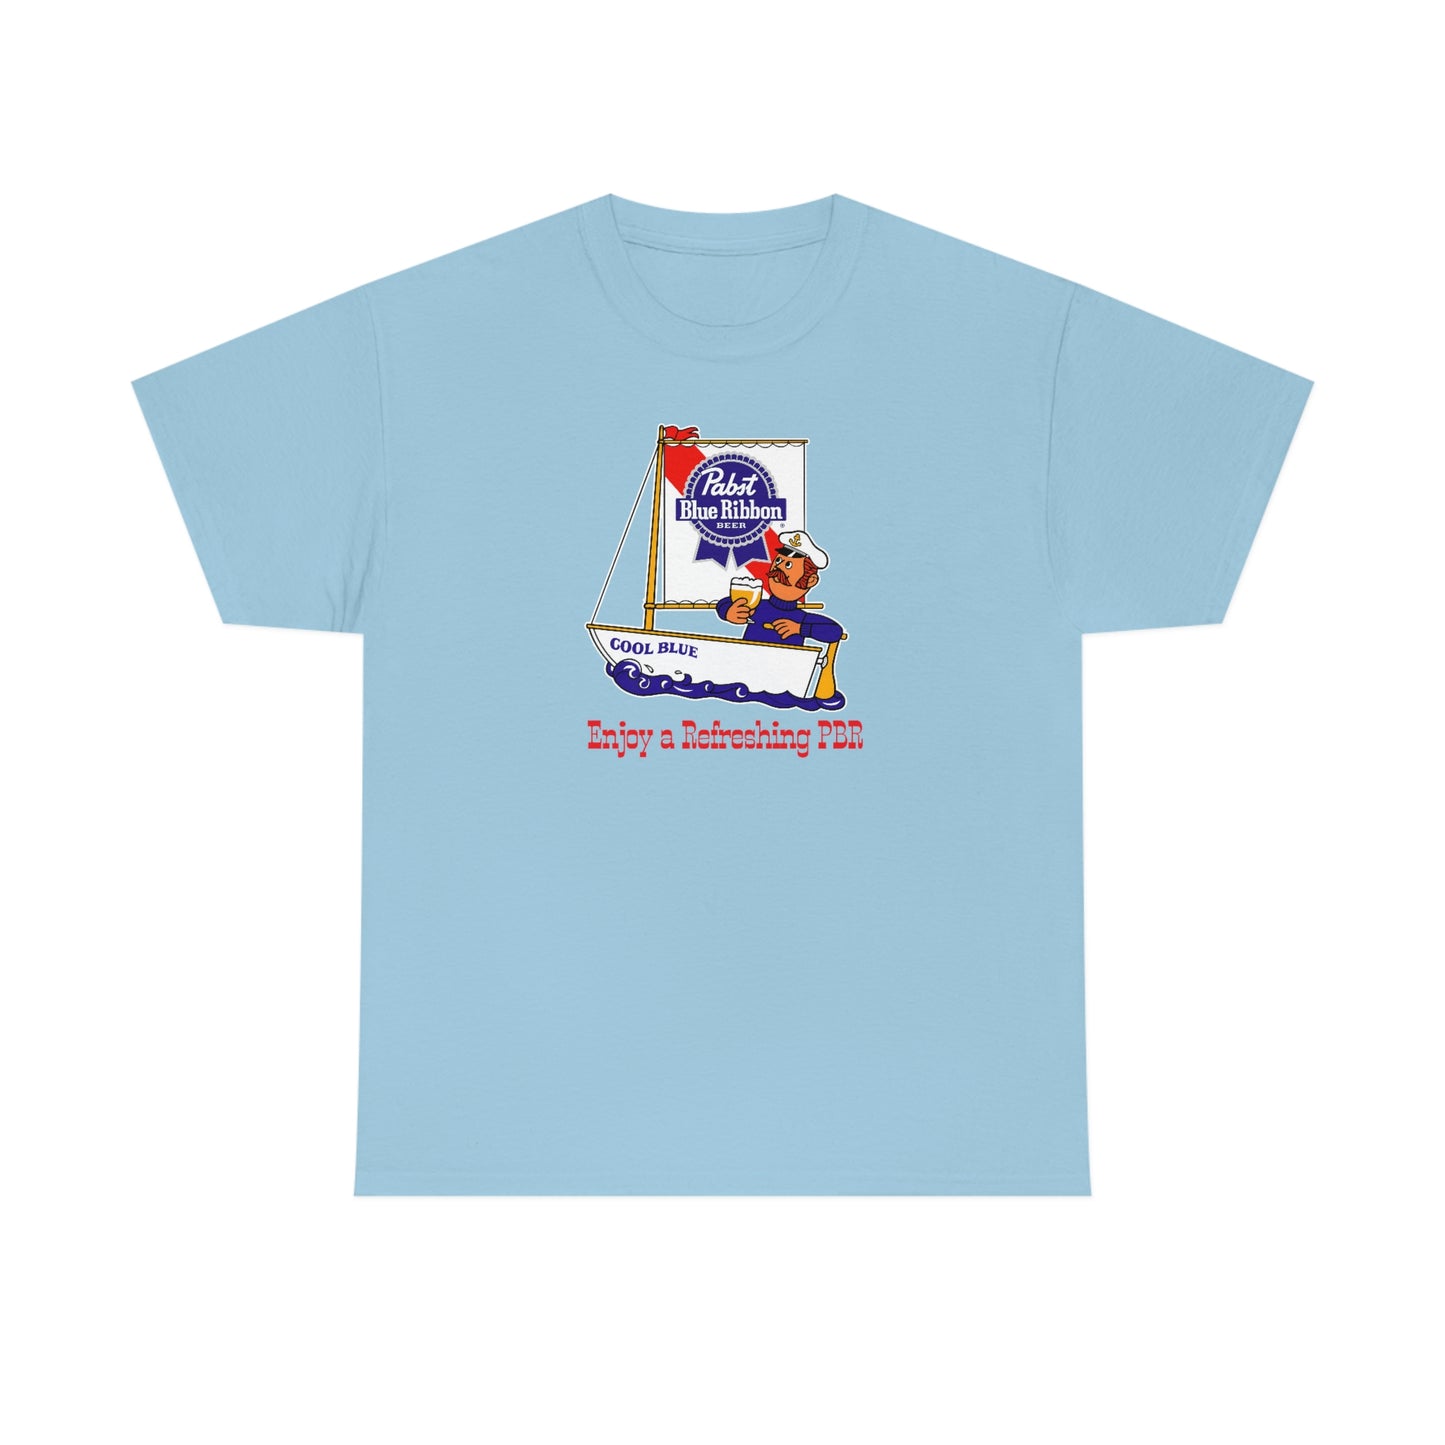 Pabst Blue Ribbon T-Shirt